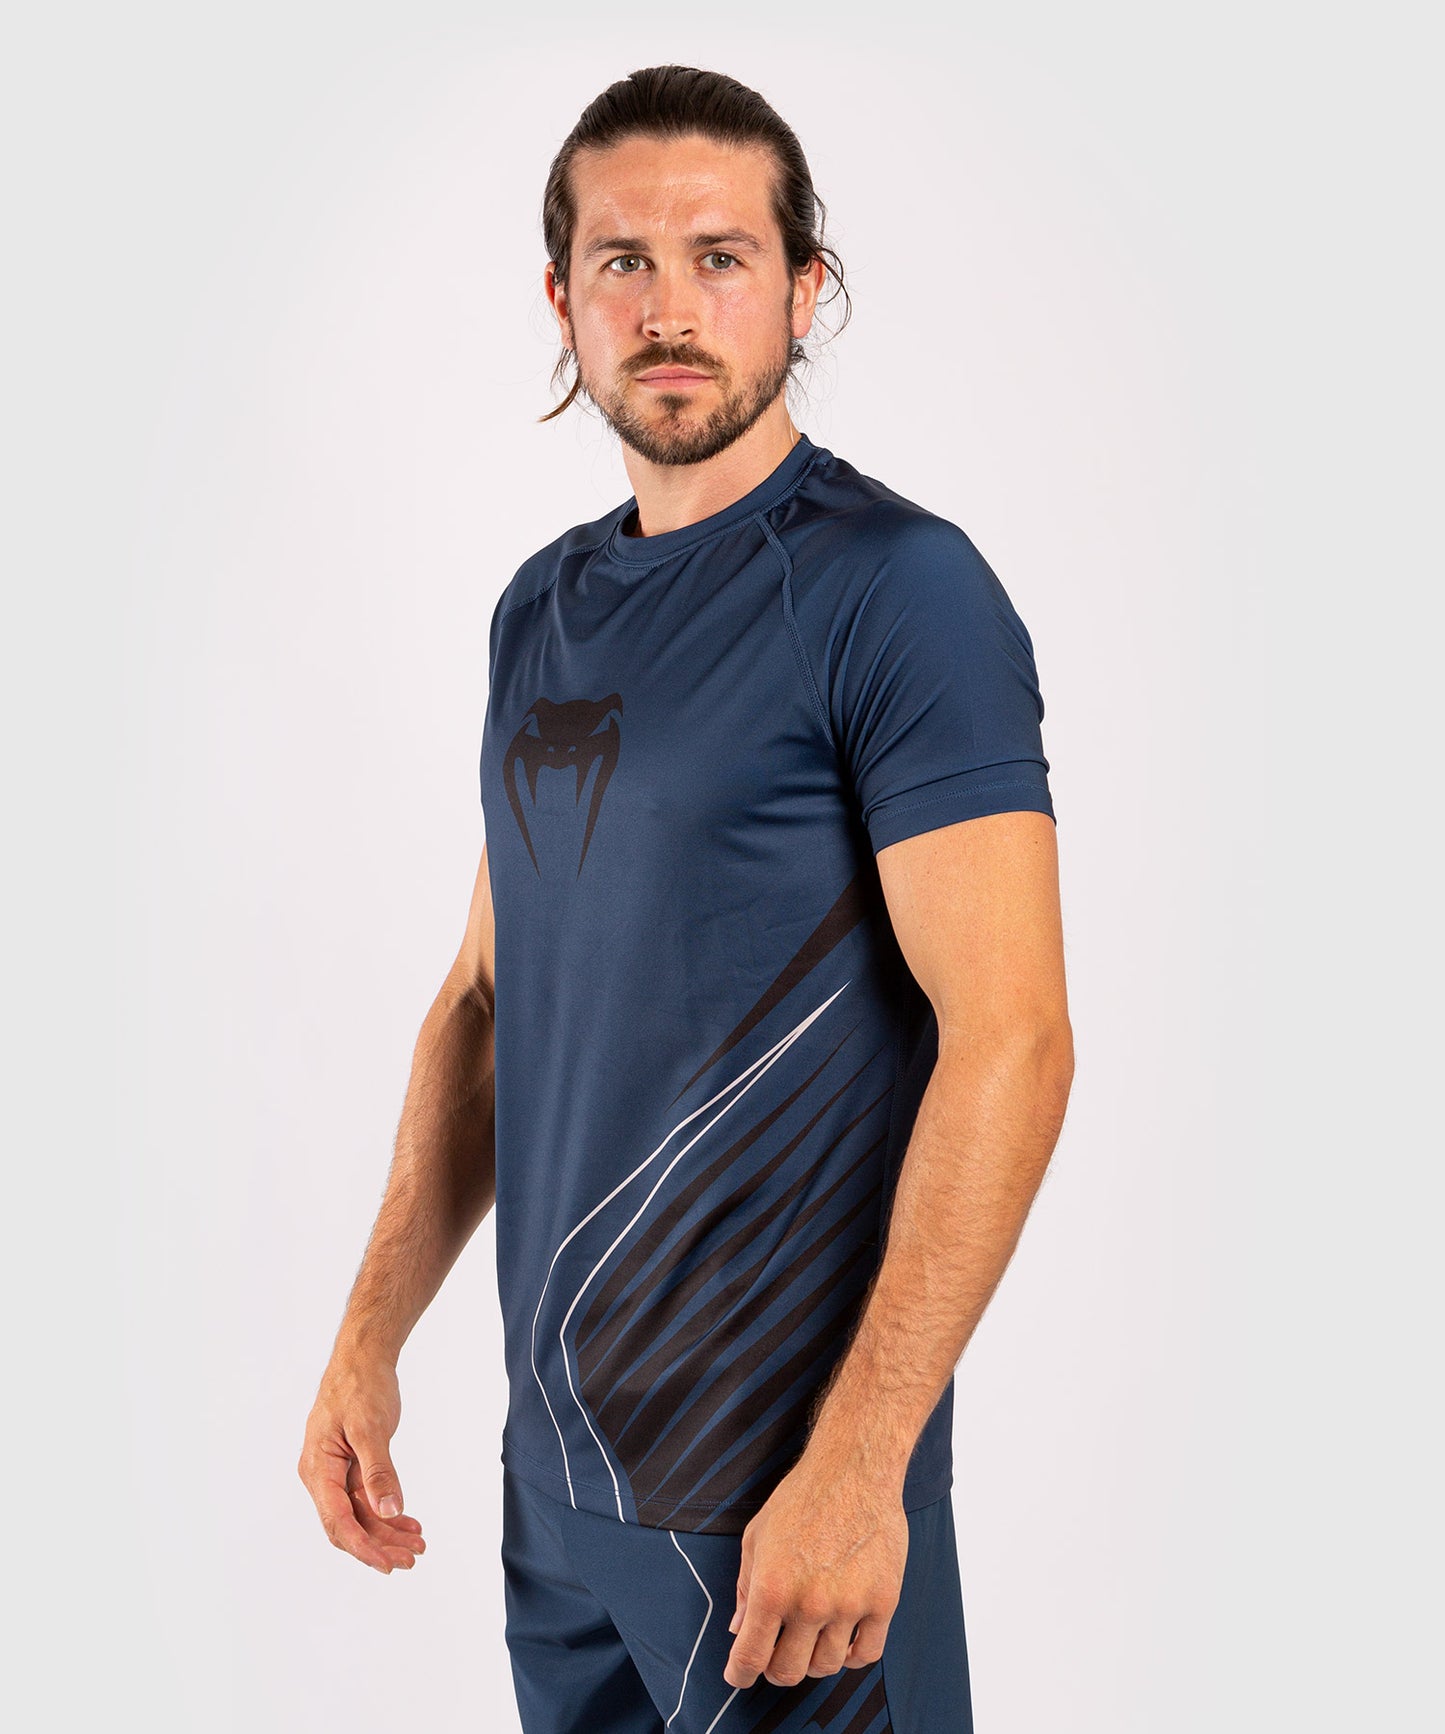 Venum Contender 5.0 Dry-Tech T-Shirt - Marineblau/sand